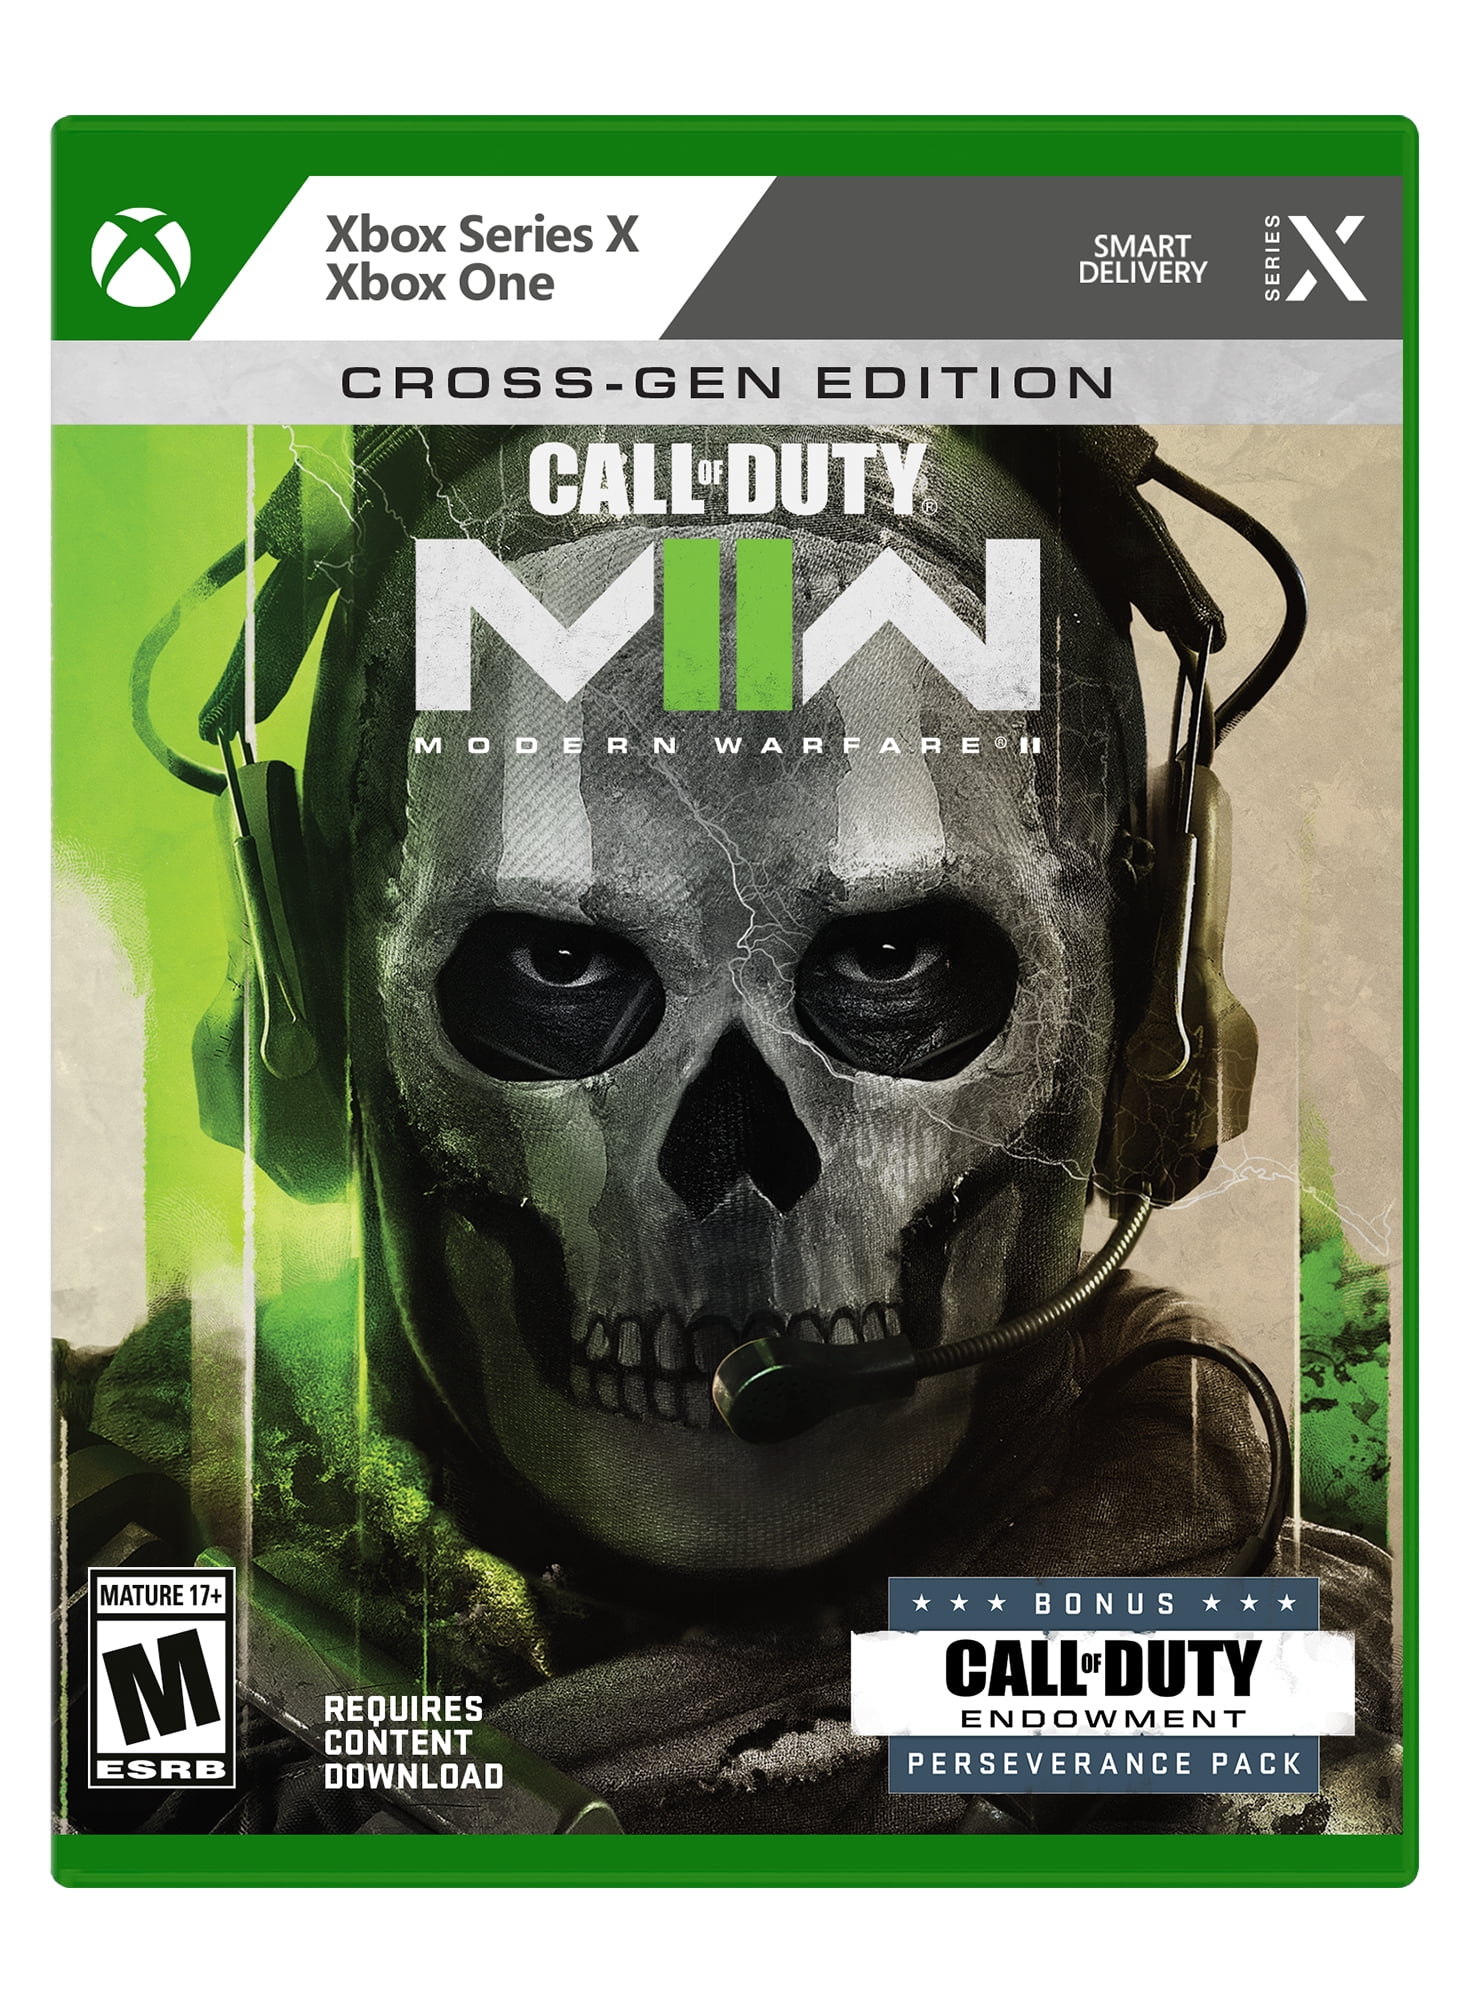 Xbox 360 Modern Warfare 2 Limited Edition Console